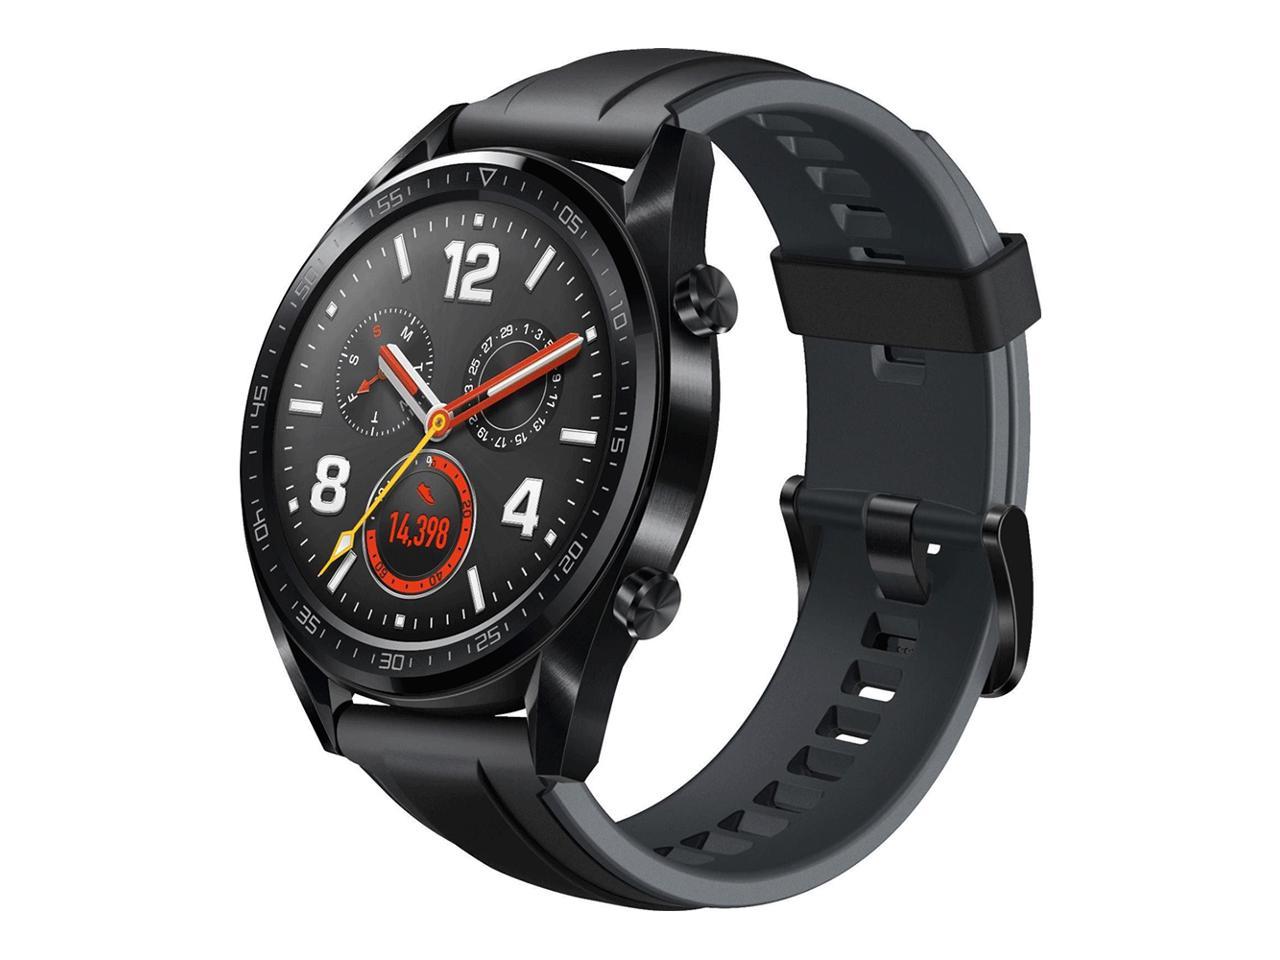 Huawei WATCH GT (FTN-B19) Sport Edition Smart Watch with Built-in GPS, GLONASS, GALILEO (Graphite Black) (International Version)